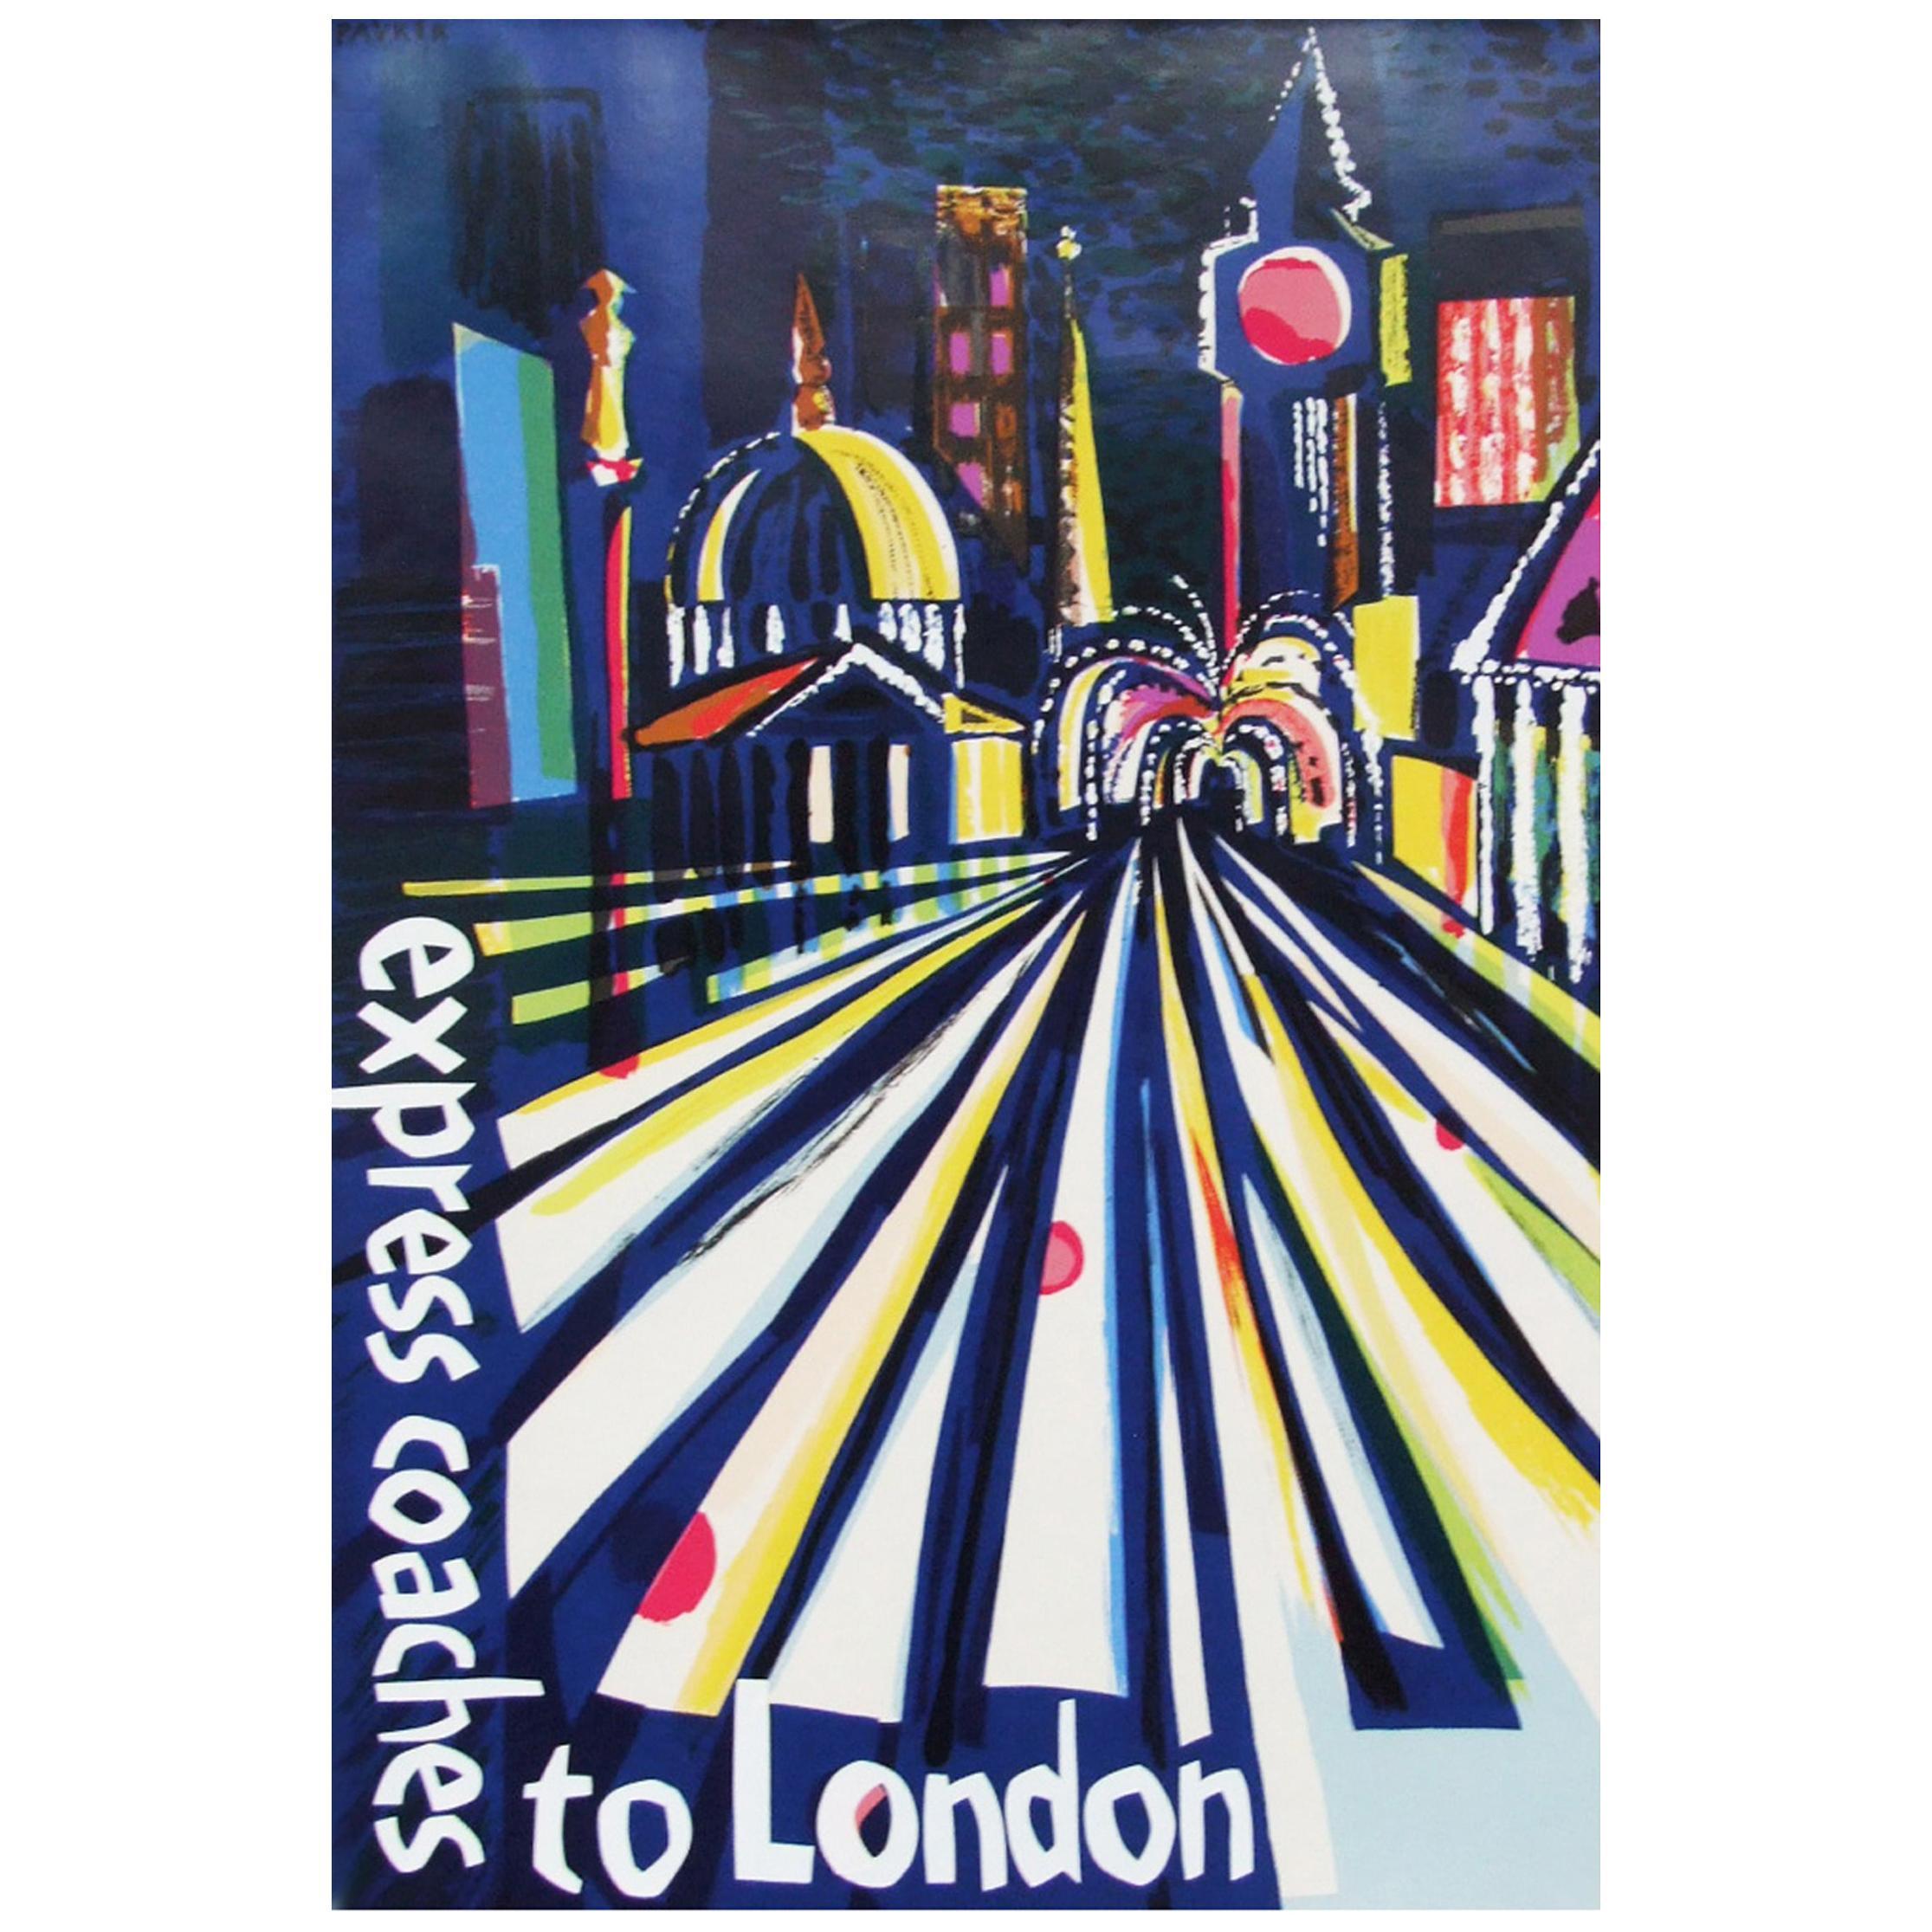 1960s London Coach Travel Poster Illustration Pop Art